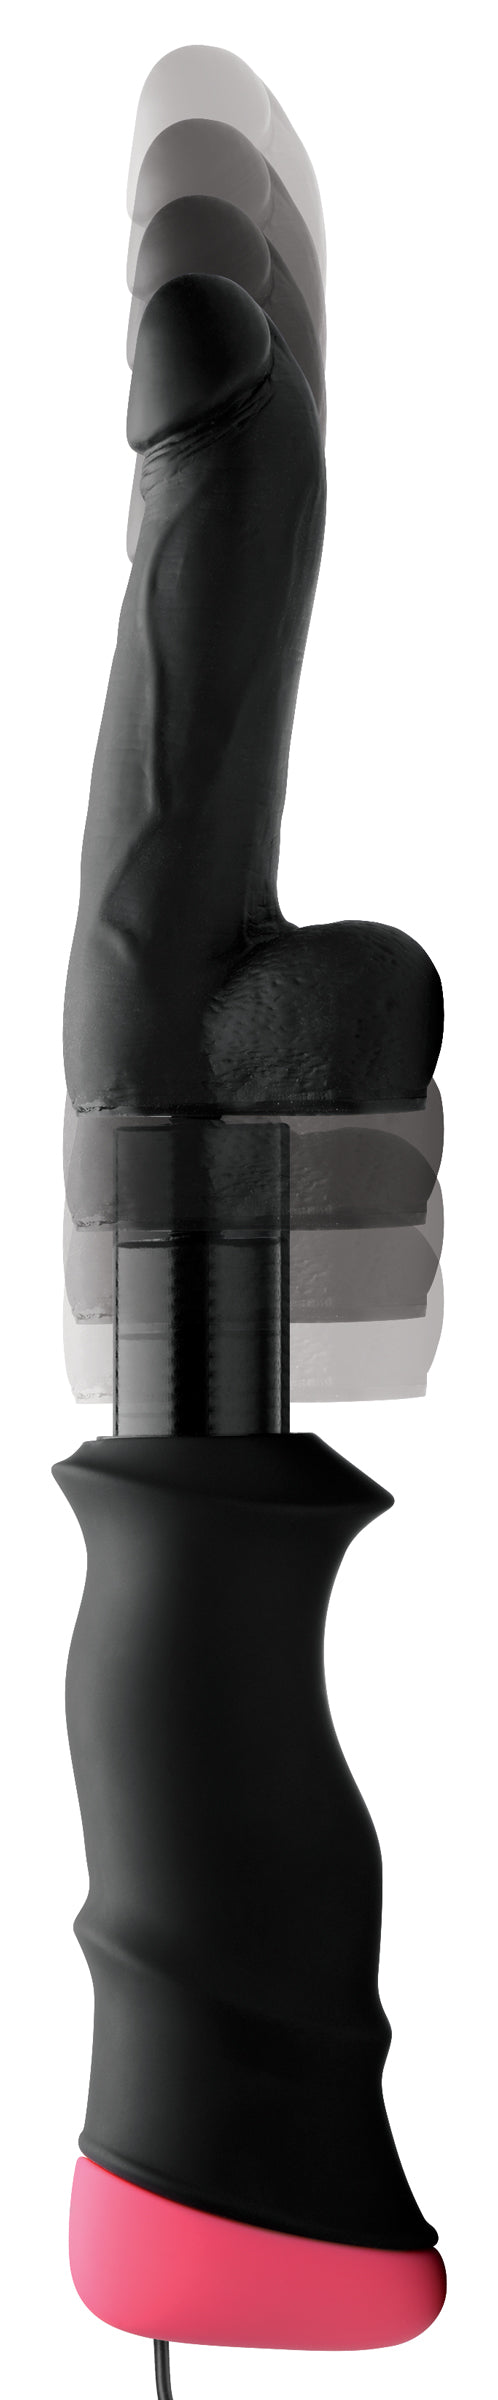 Mega-Pounder Hand-held Thrusting Silicone Dildo - UABDSM